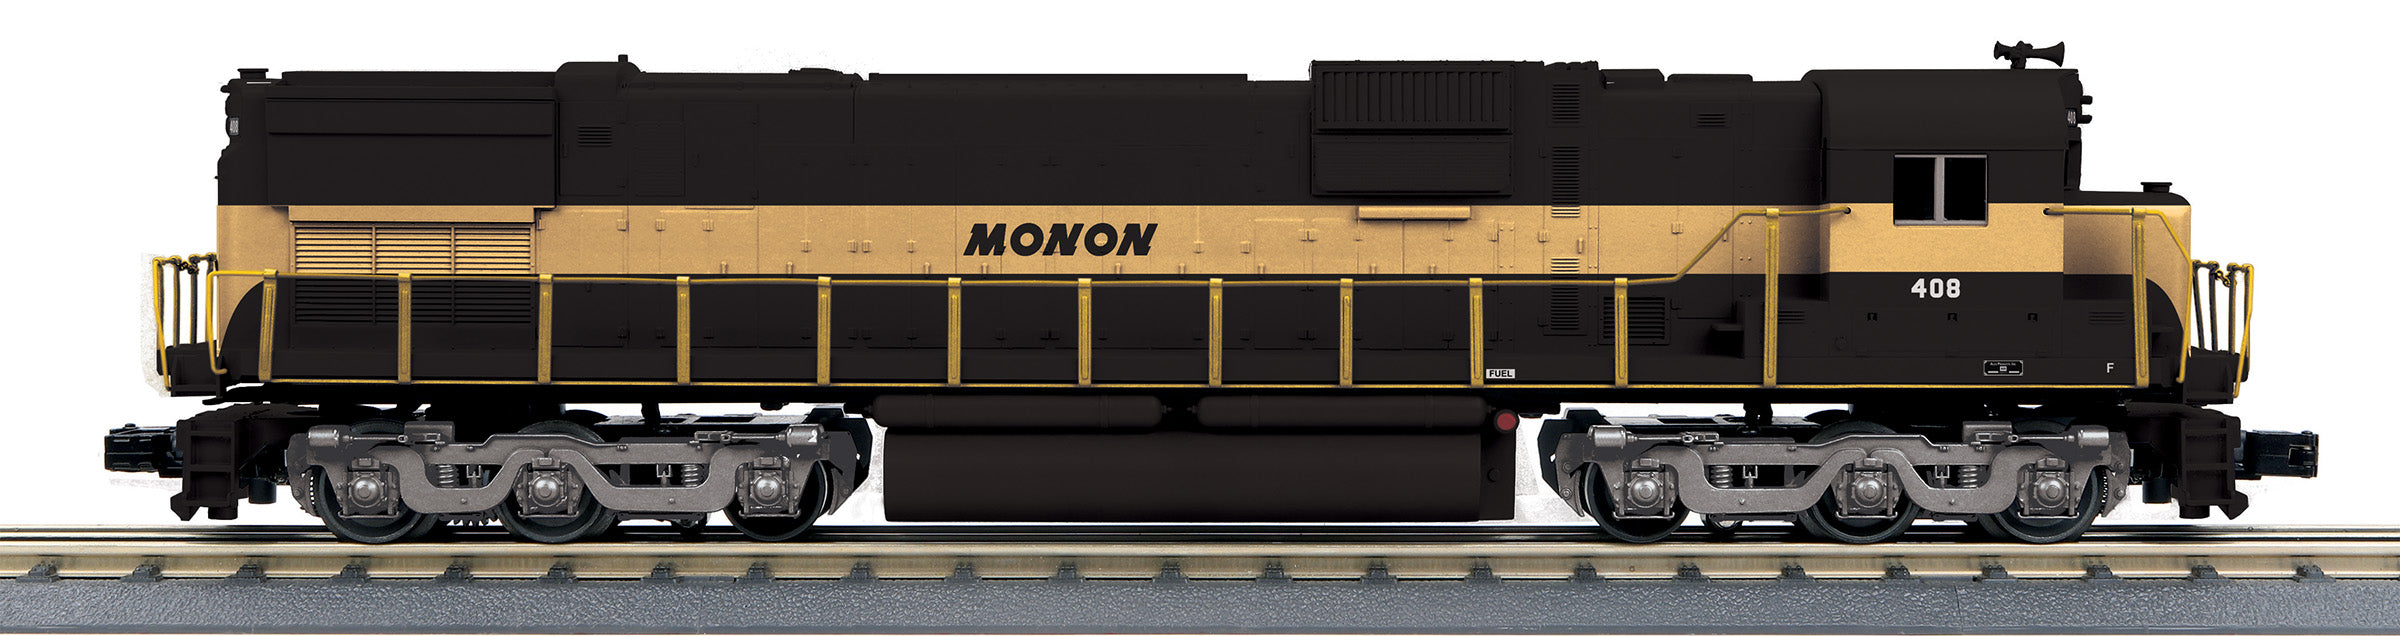 MTH 30-21096-1 - ALCO C-628 Diesel Locomotive "Monon" #408 - Custom Run for MrMuffin'sTrains